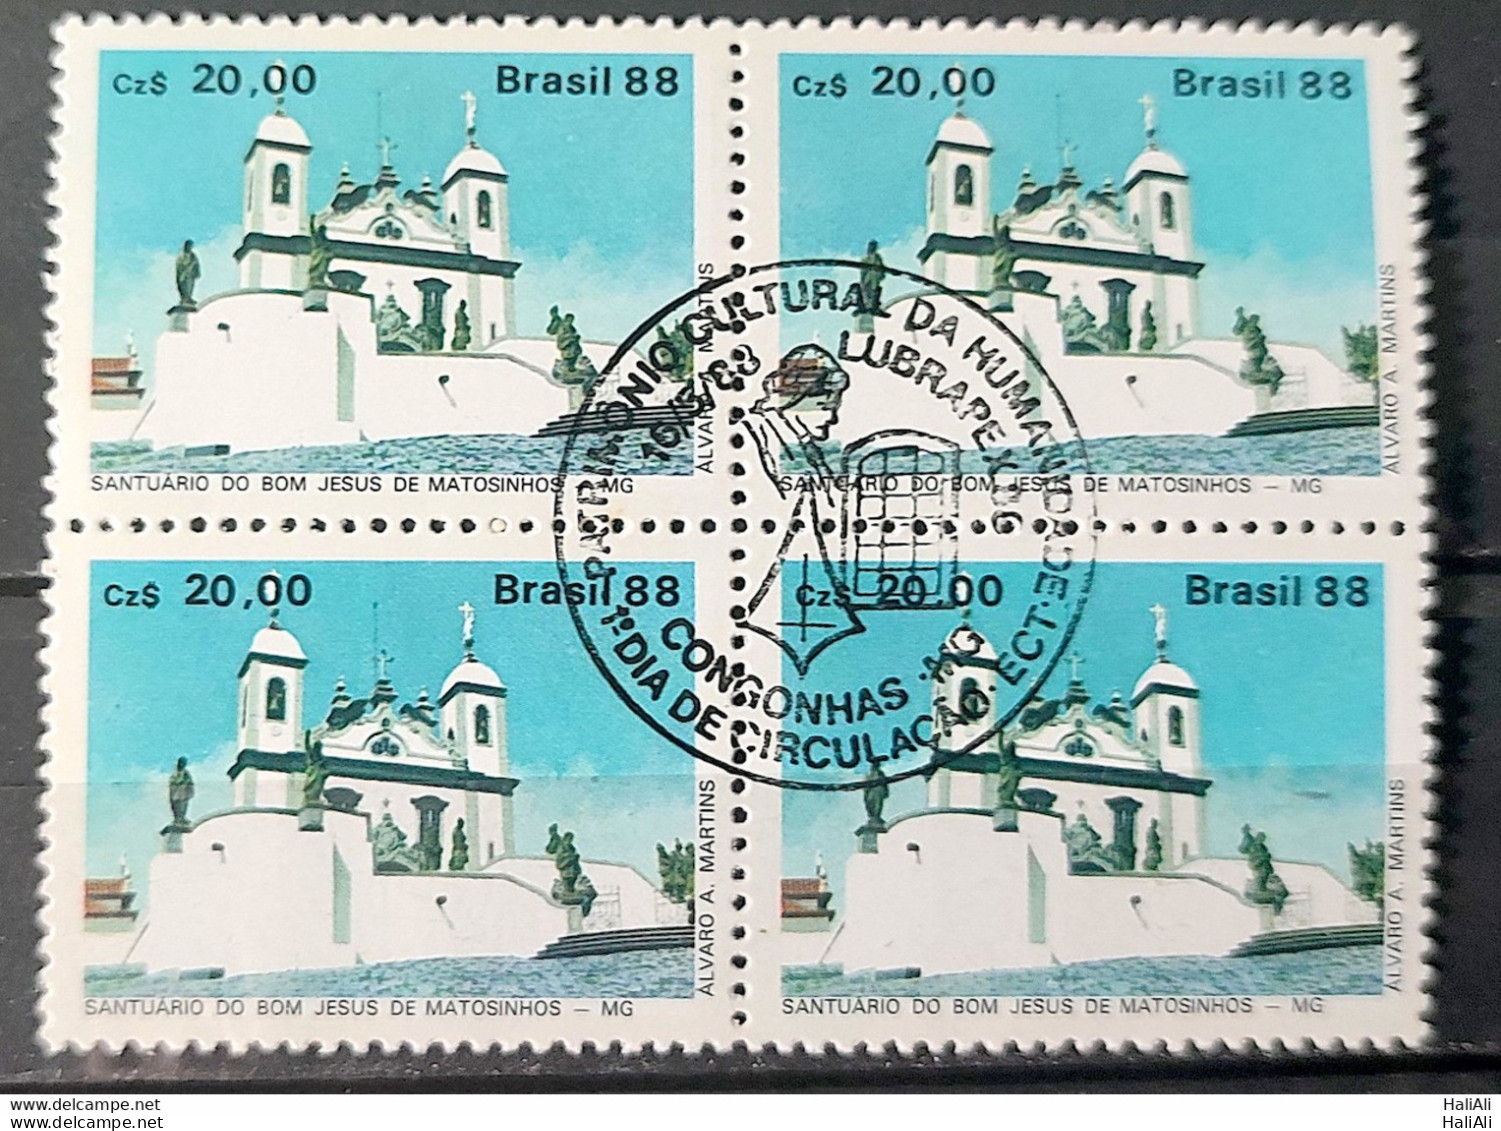 C 1585 Brazil Stamp Lubrapex Portugal Bom Jesus De Matosinhos 1988 Block Of 4 CBC MG - Unused Stamps